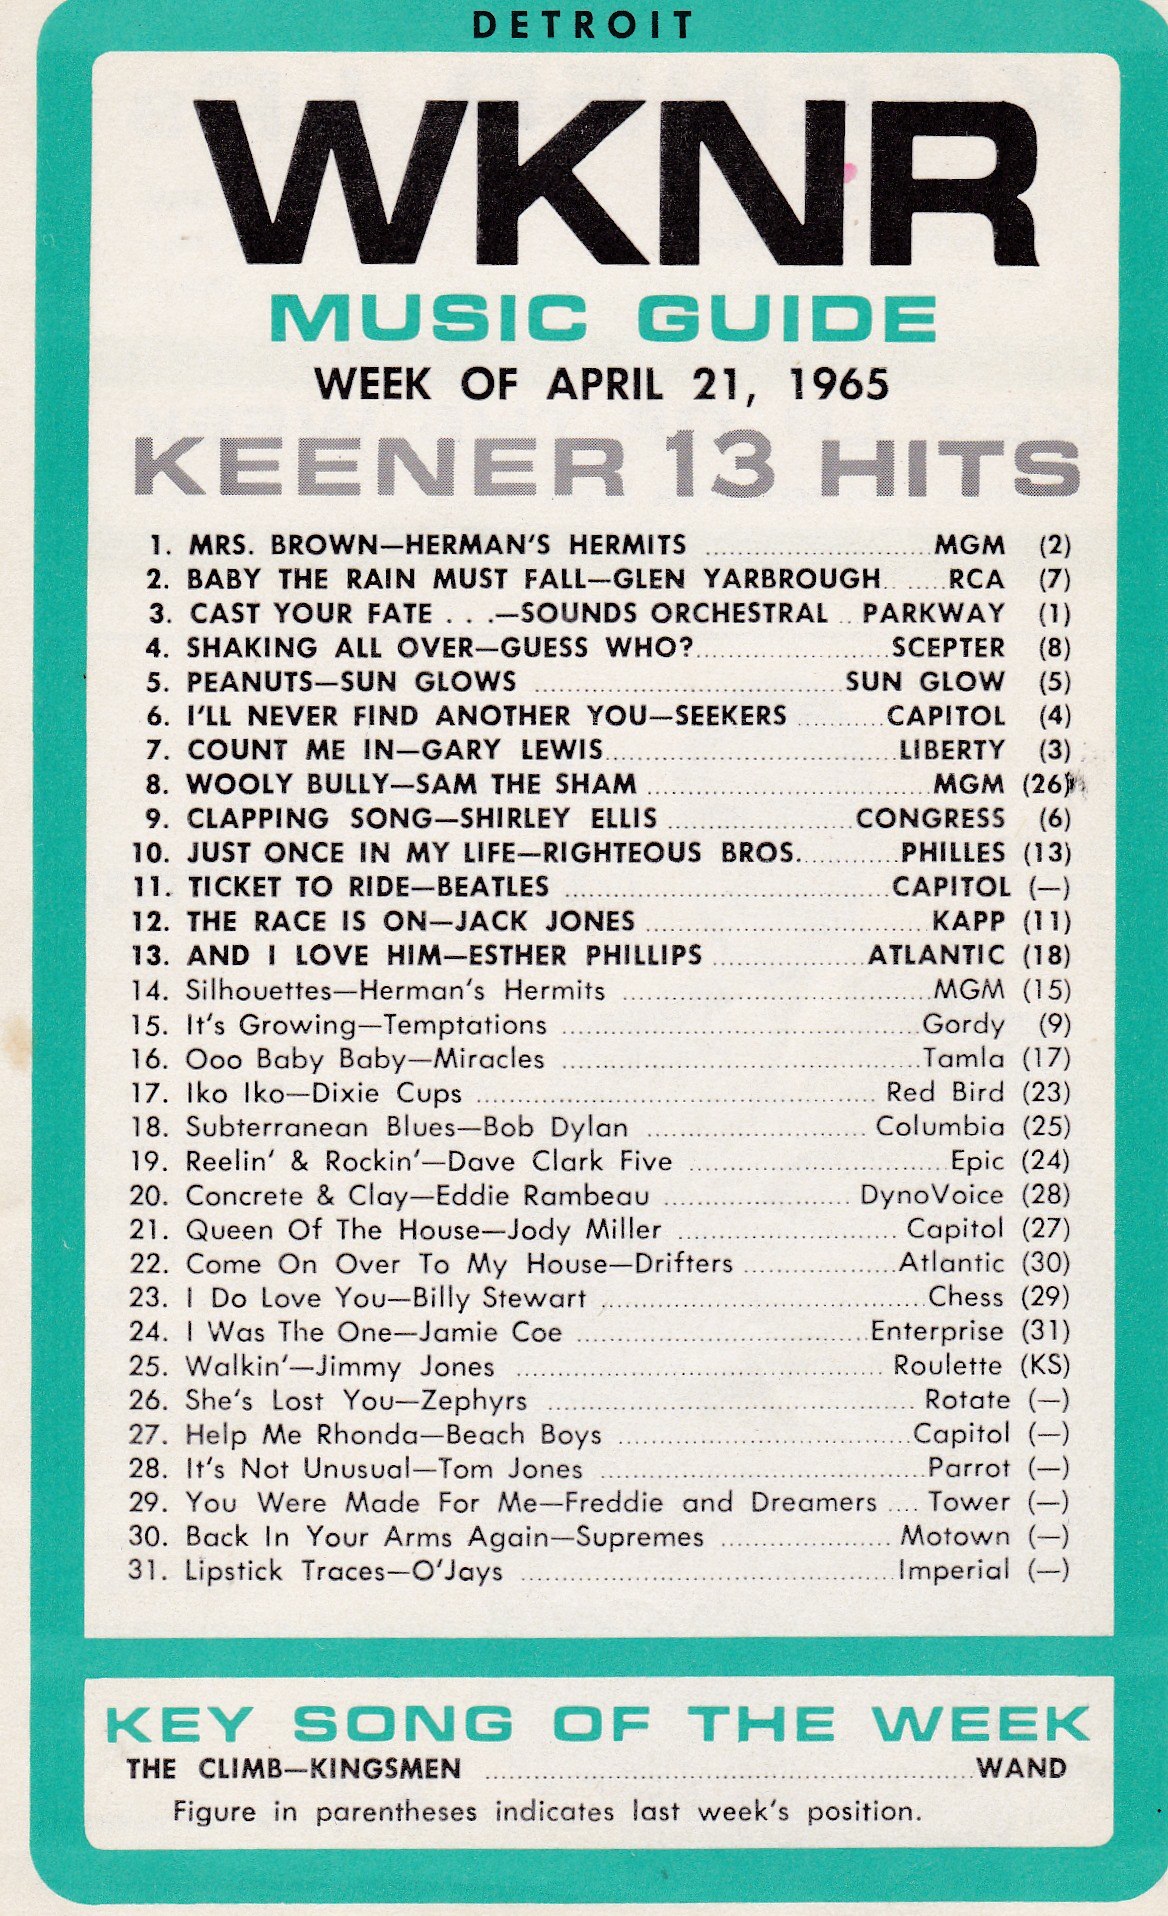 WKNR SURVEY - APRIL 21, 1965